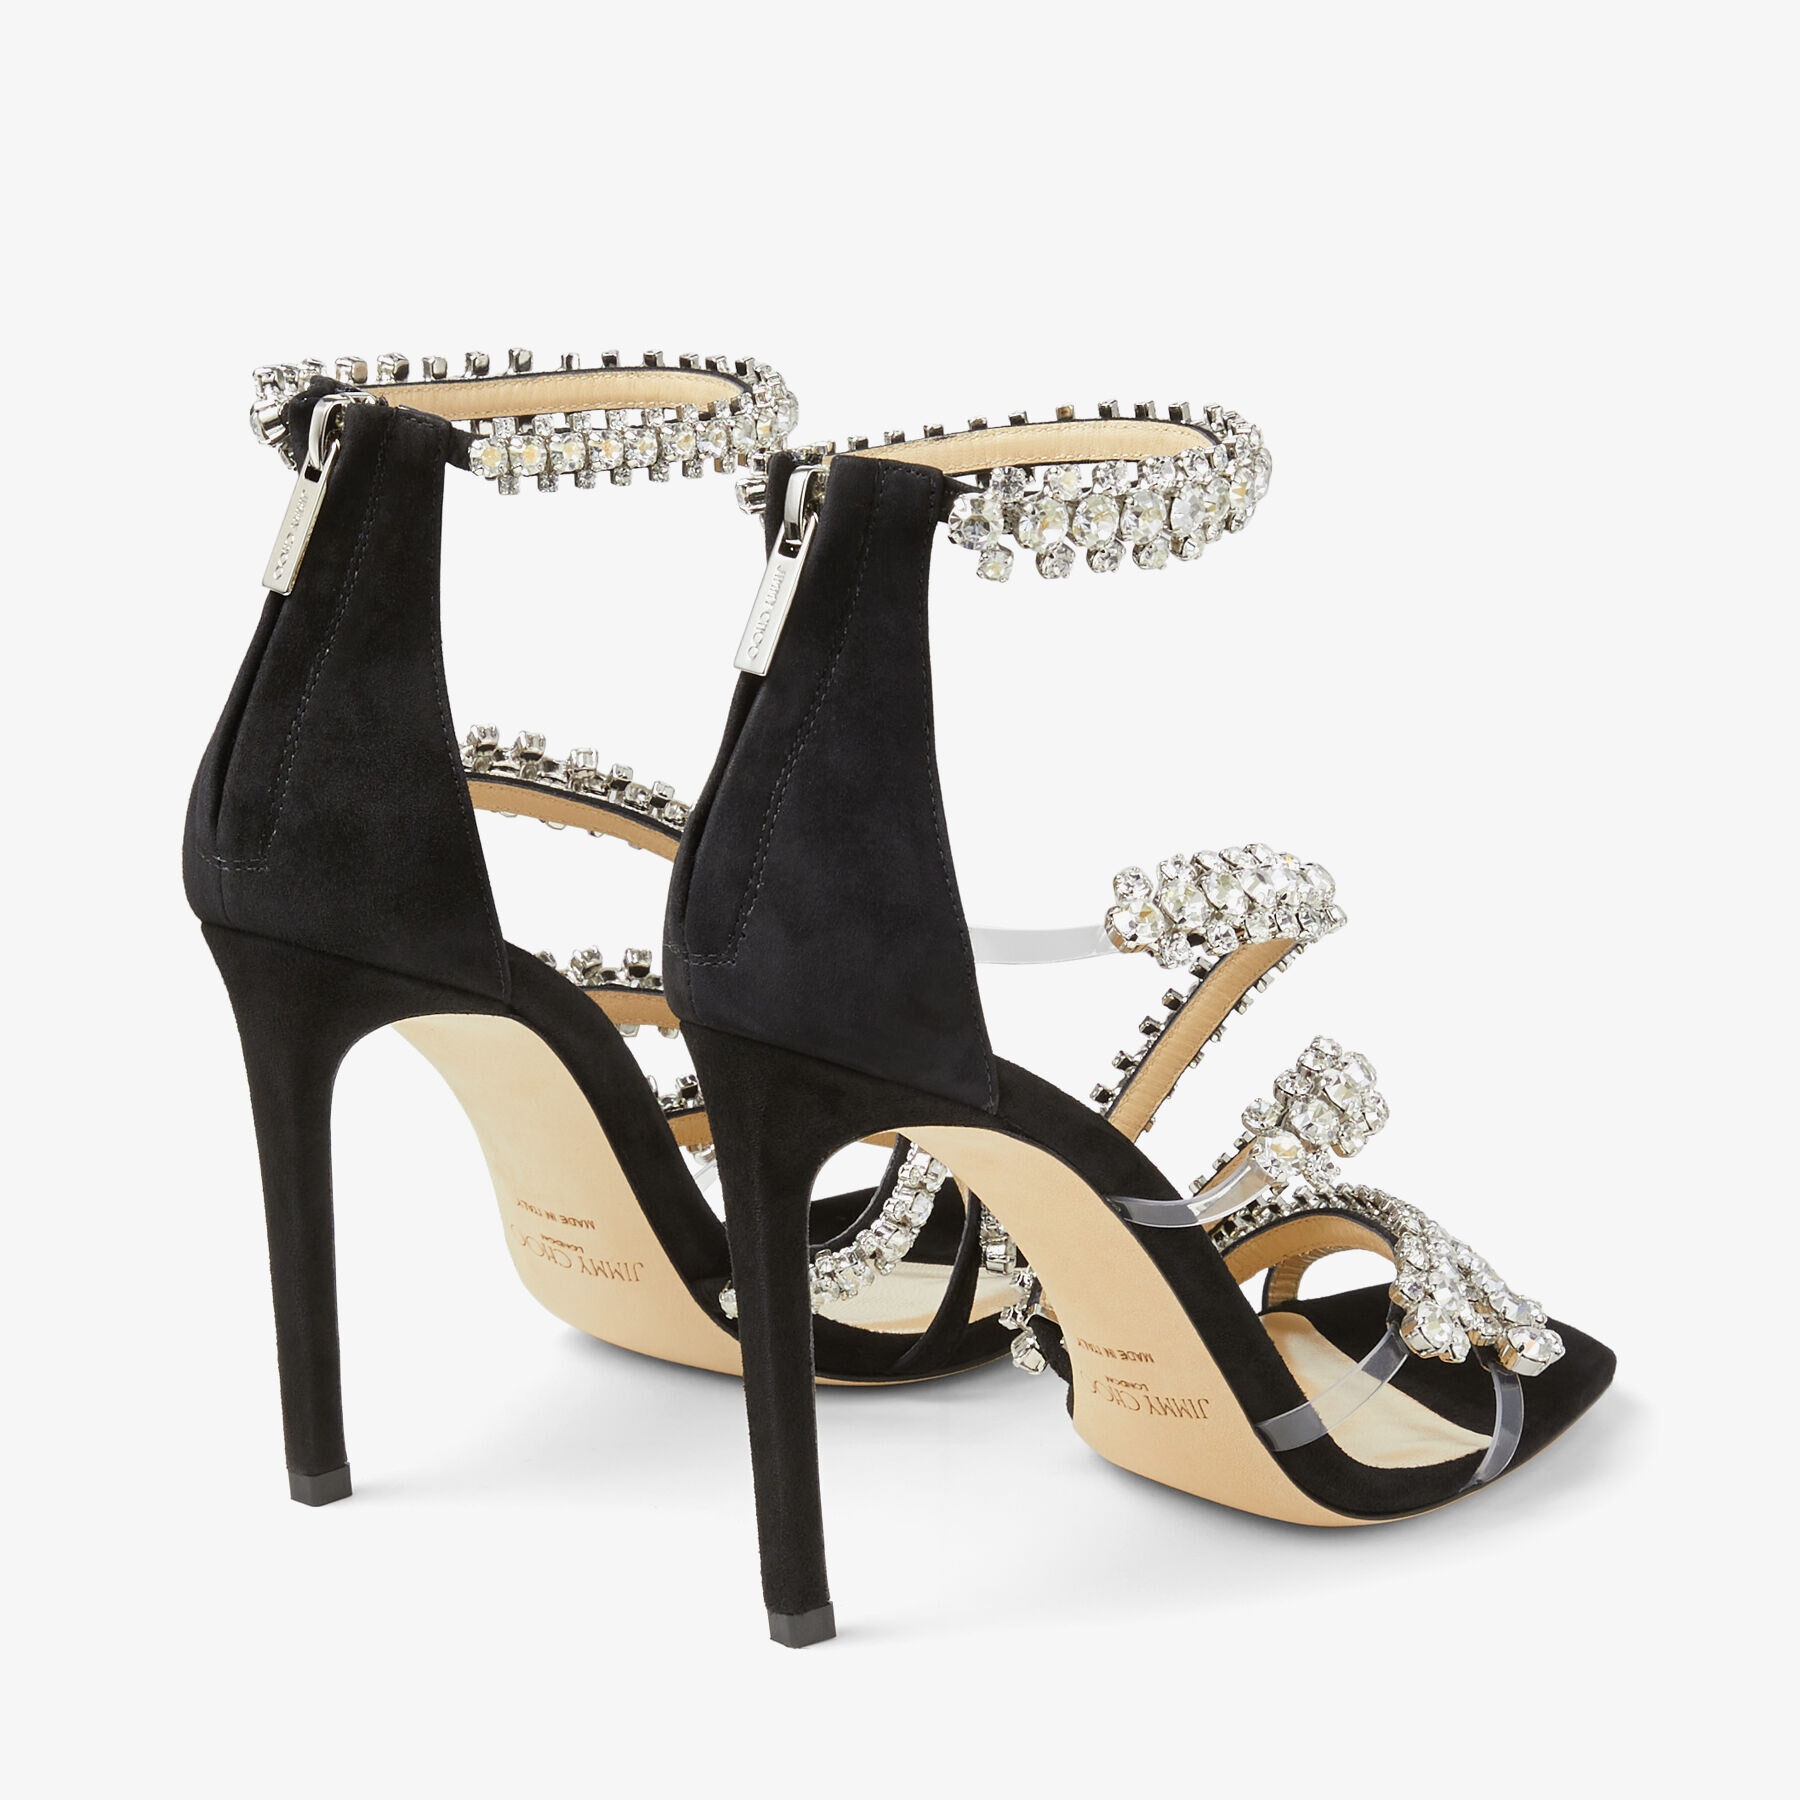 Josefine 100
Black Suede Sandals with Crystal Embellishment - 5